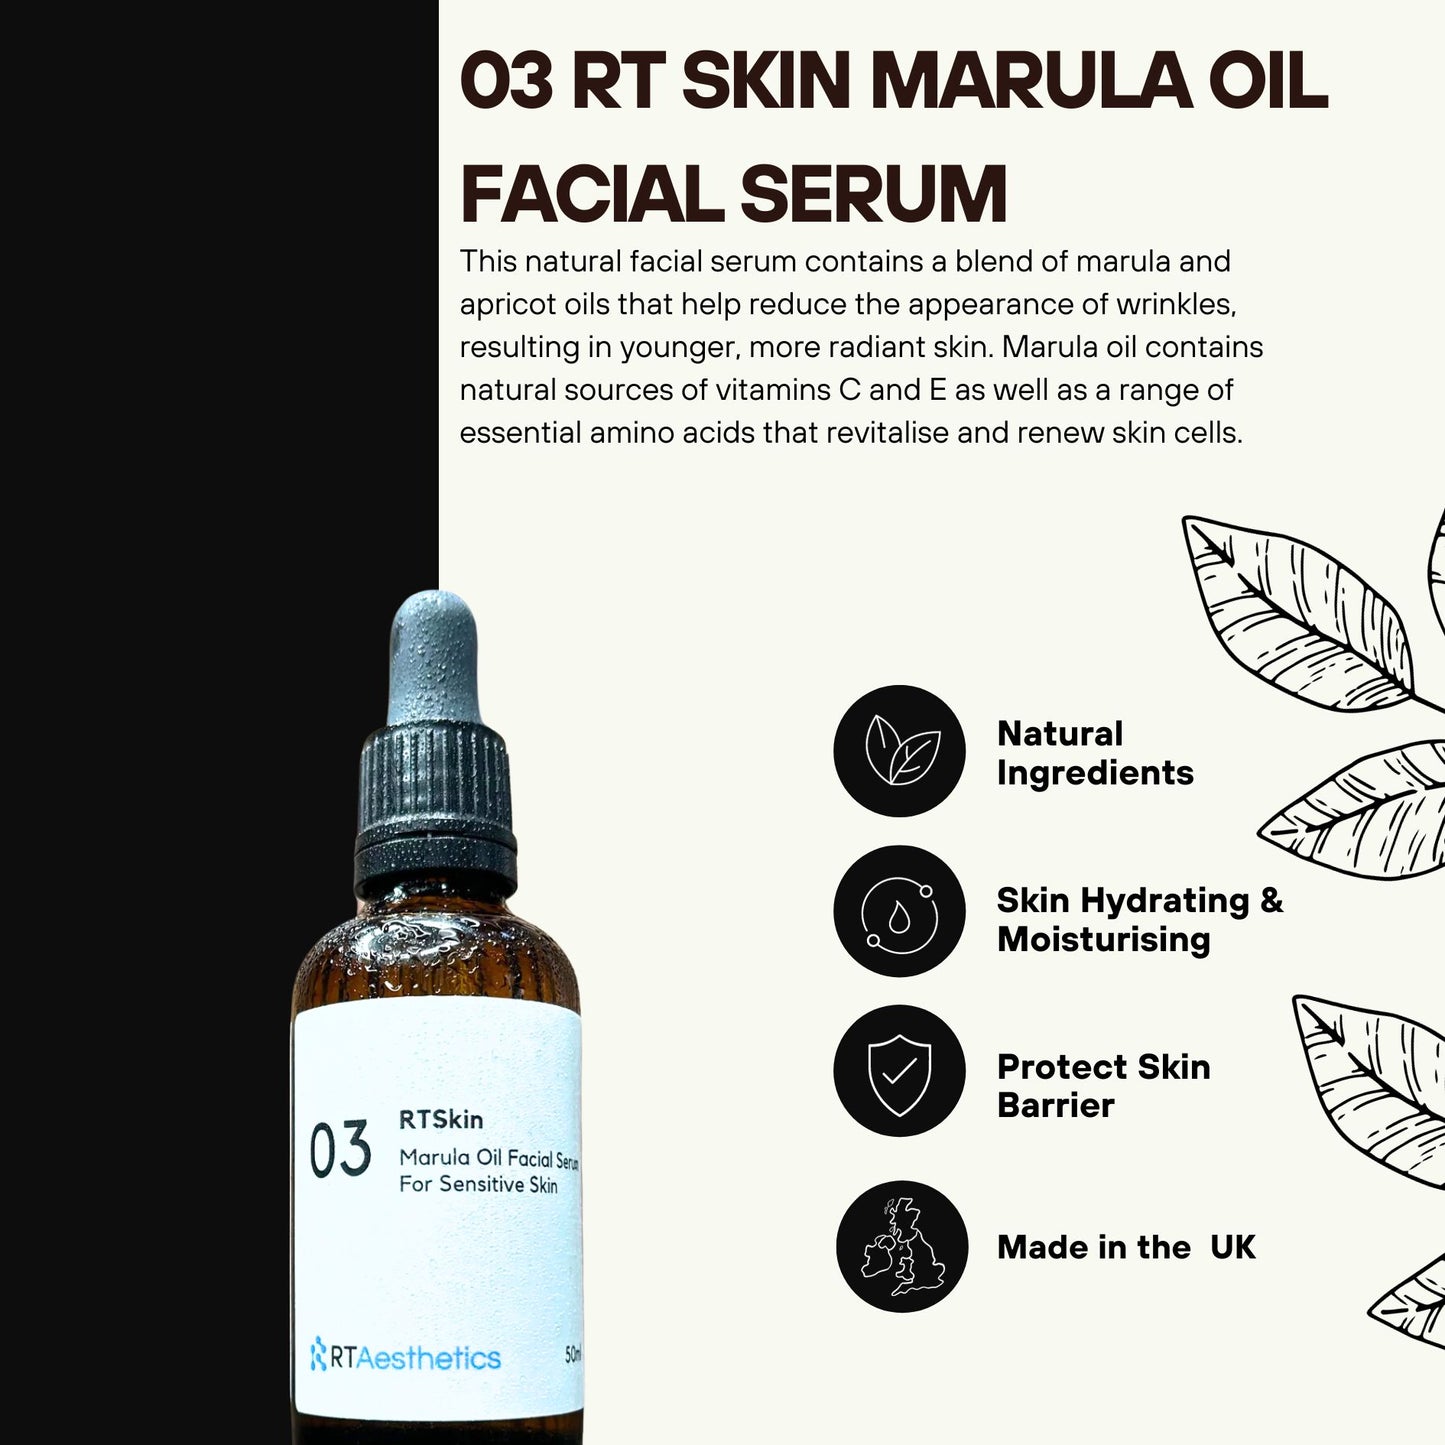 03 RT Skin Marula Oil Facial Serum